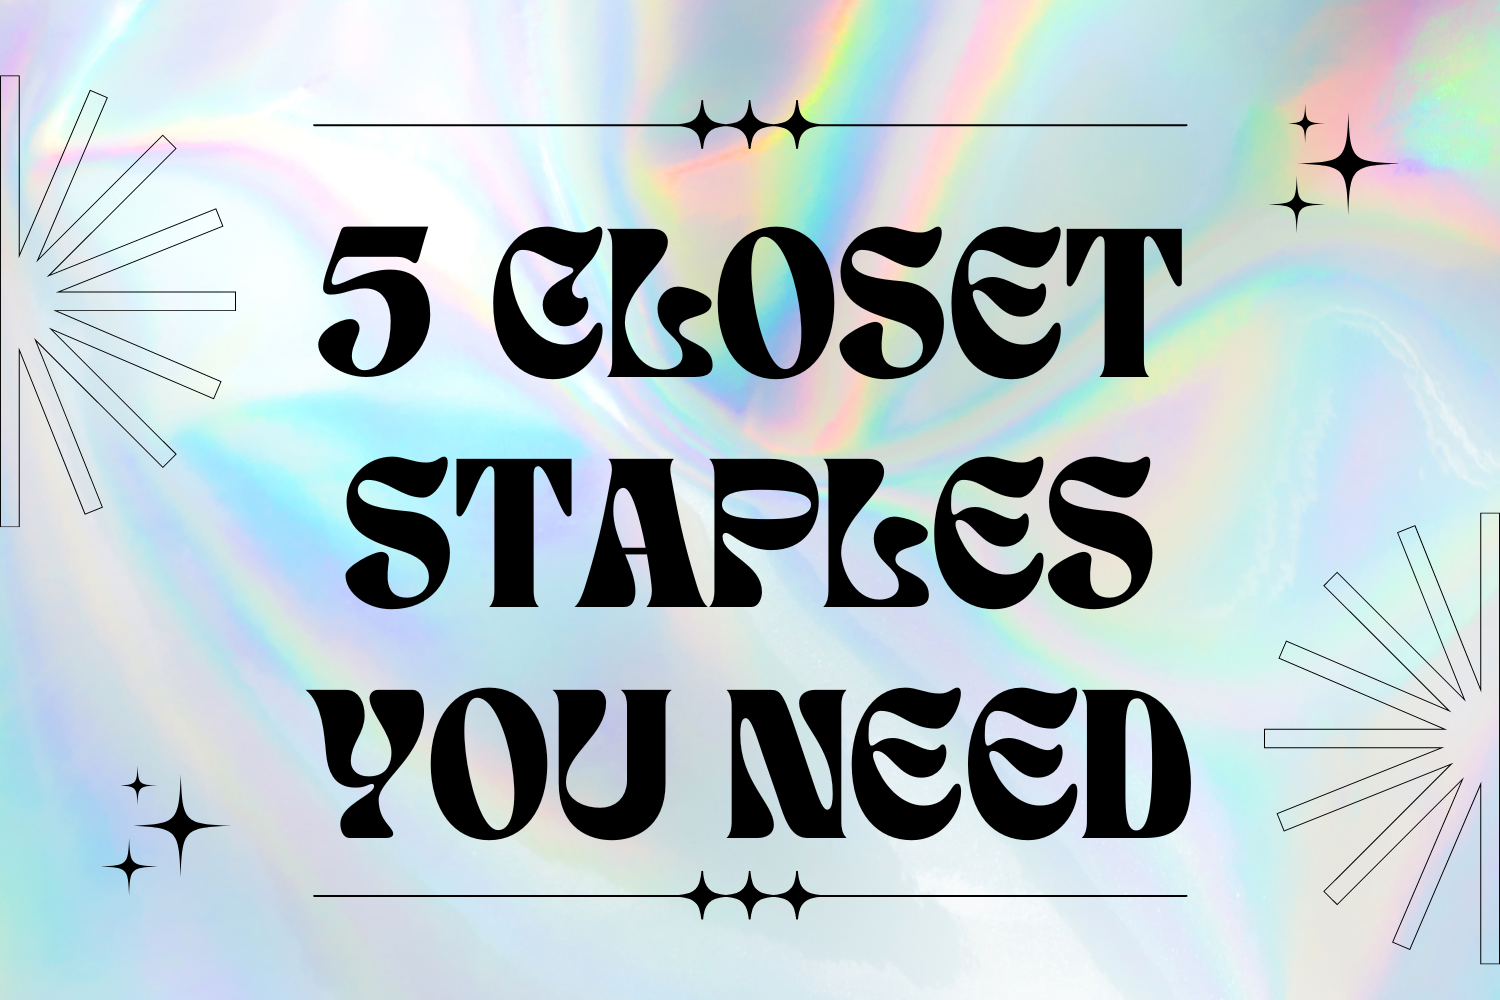 5 Closet Staples You Need!